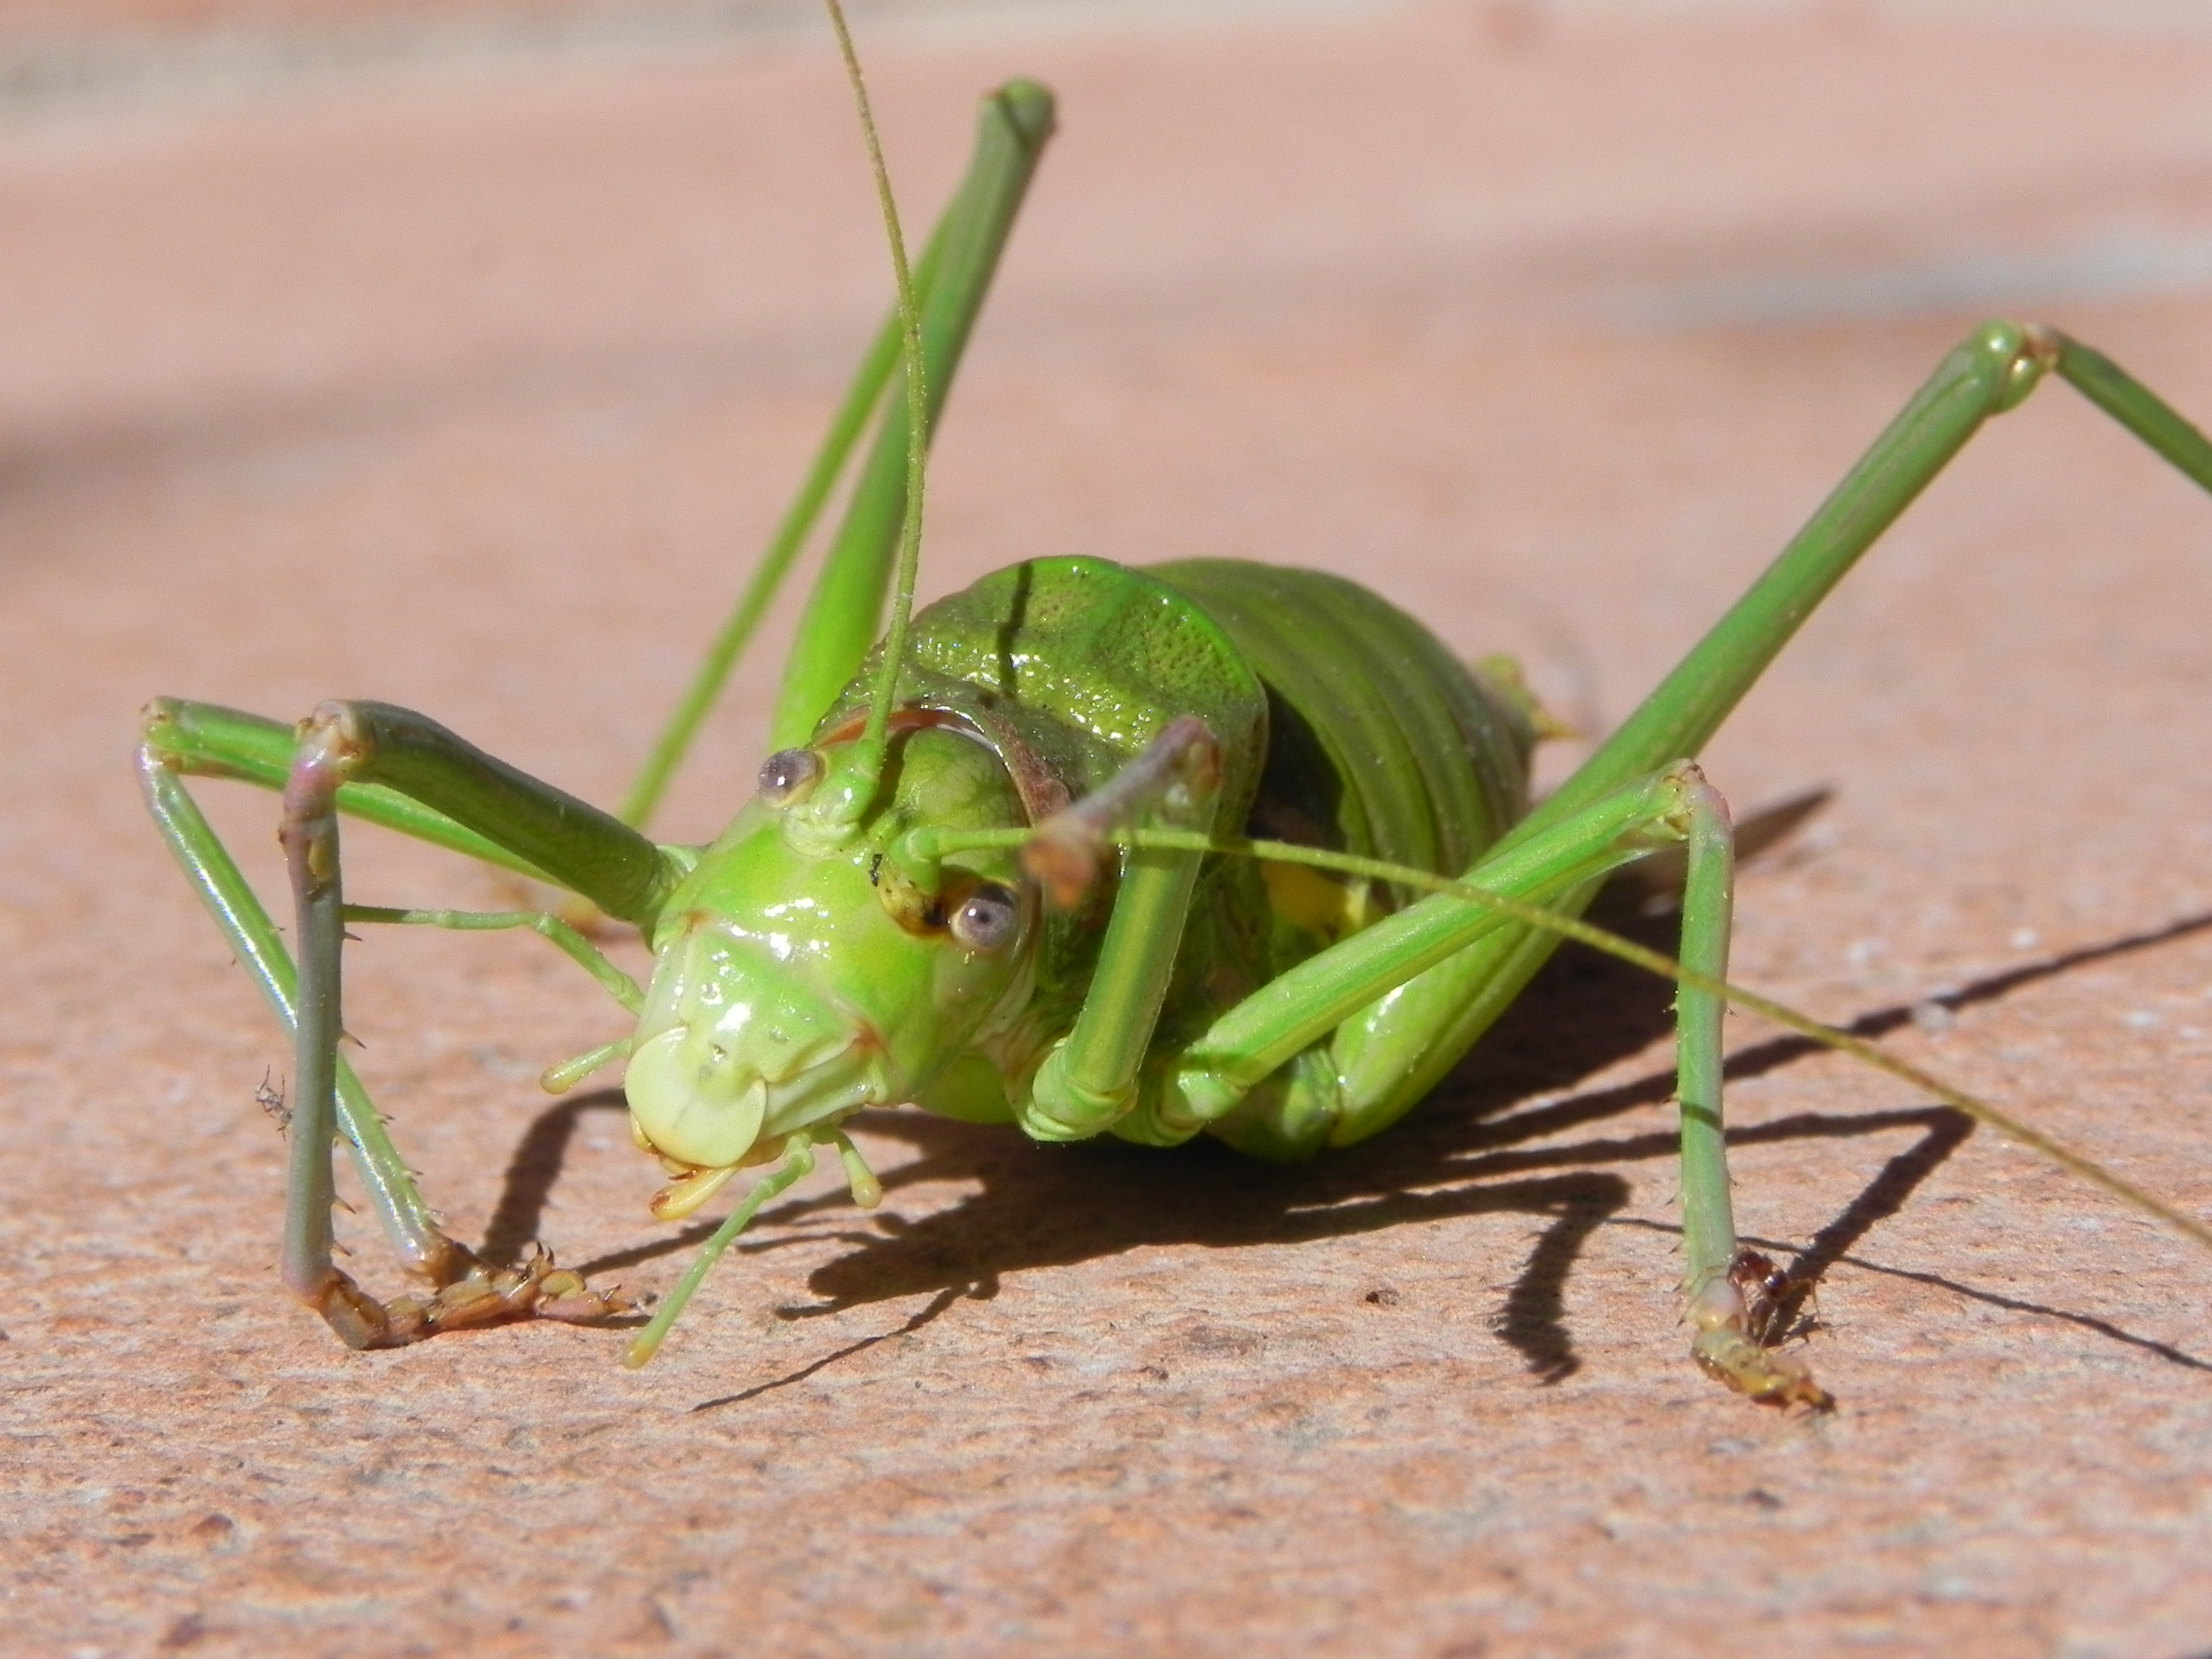 NaturePlus: Big Green Bug from Spain